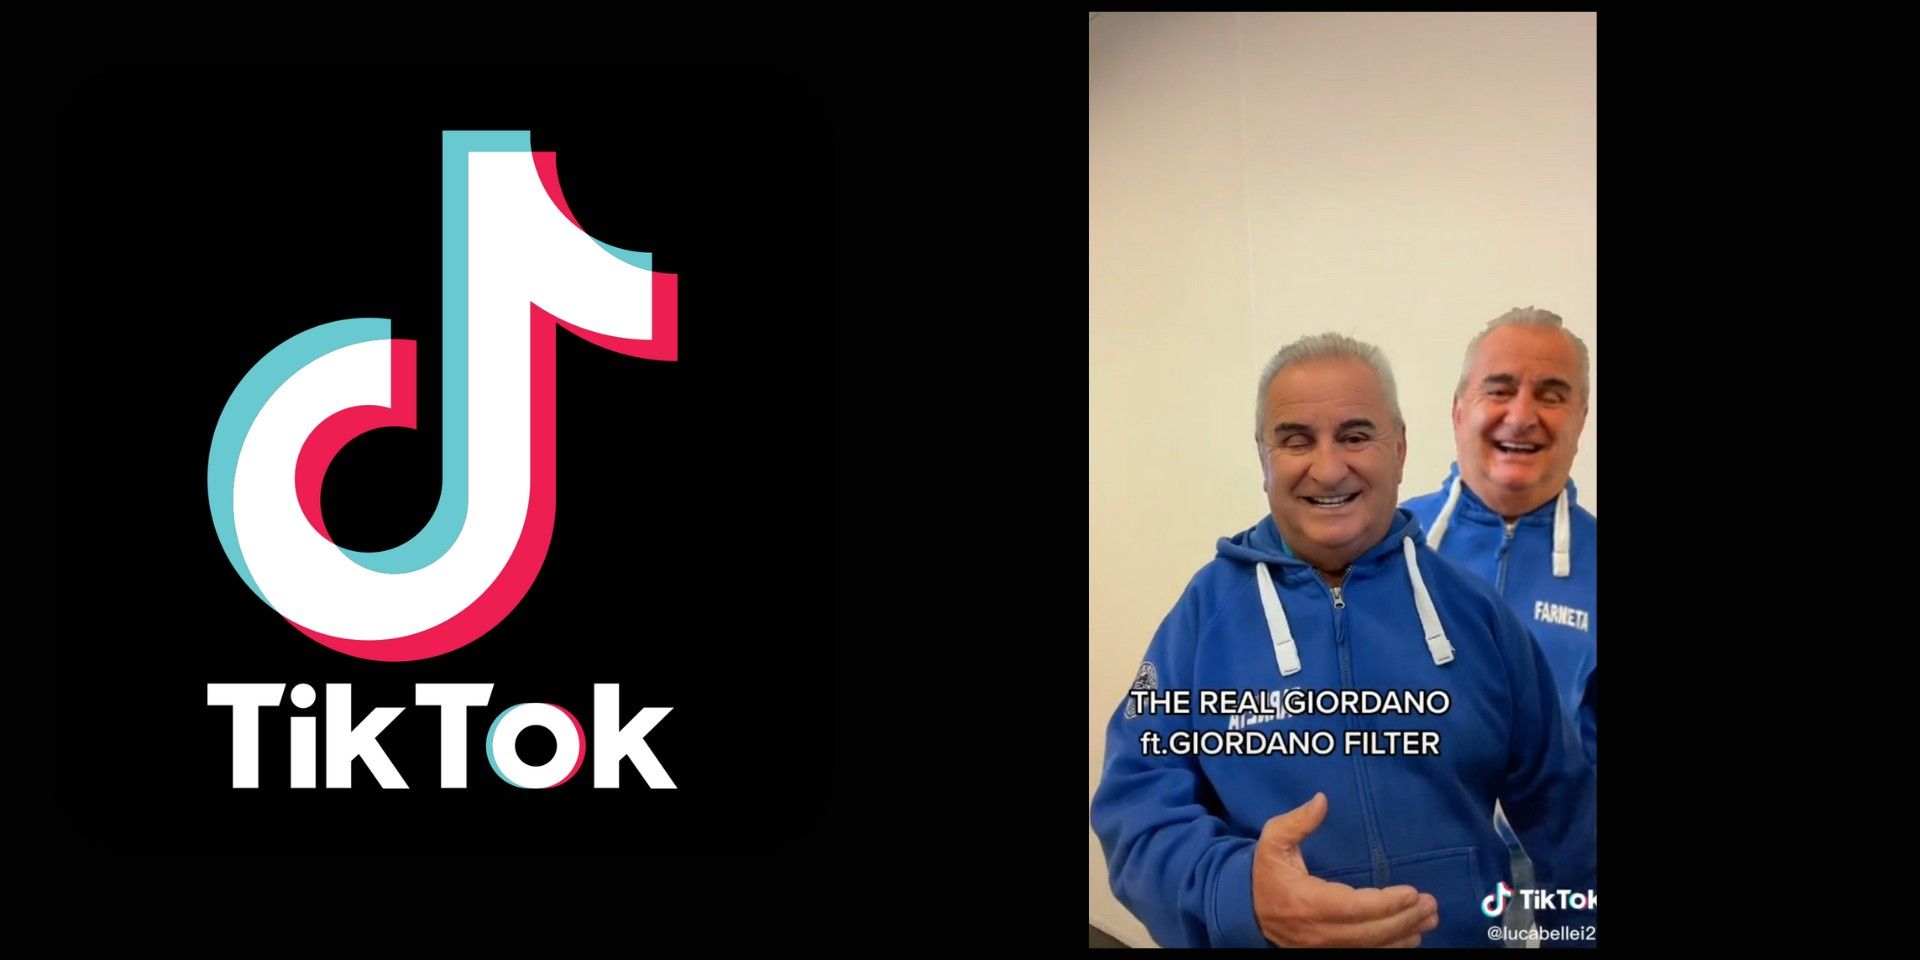 TikTok's Giordano Filter